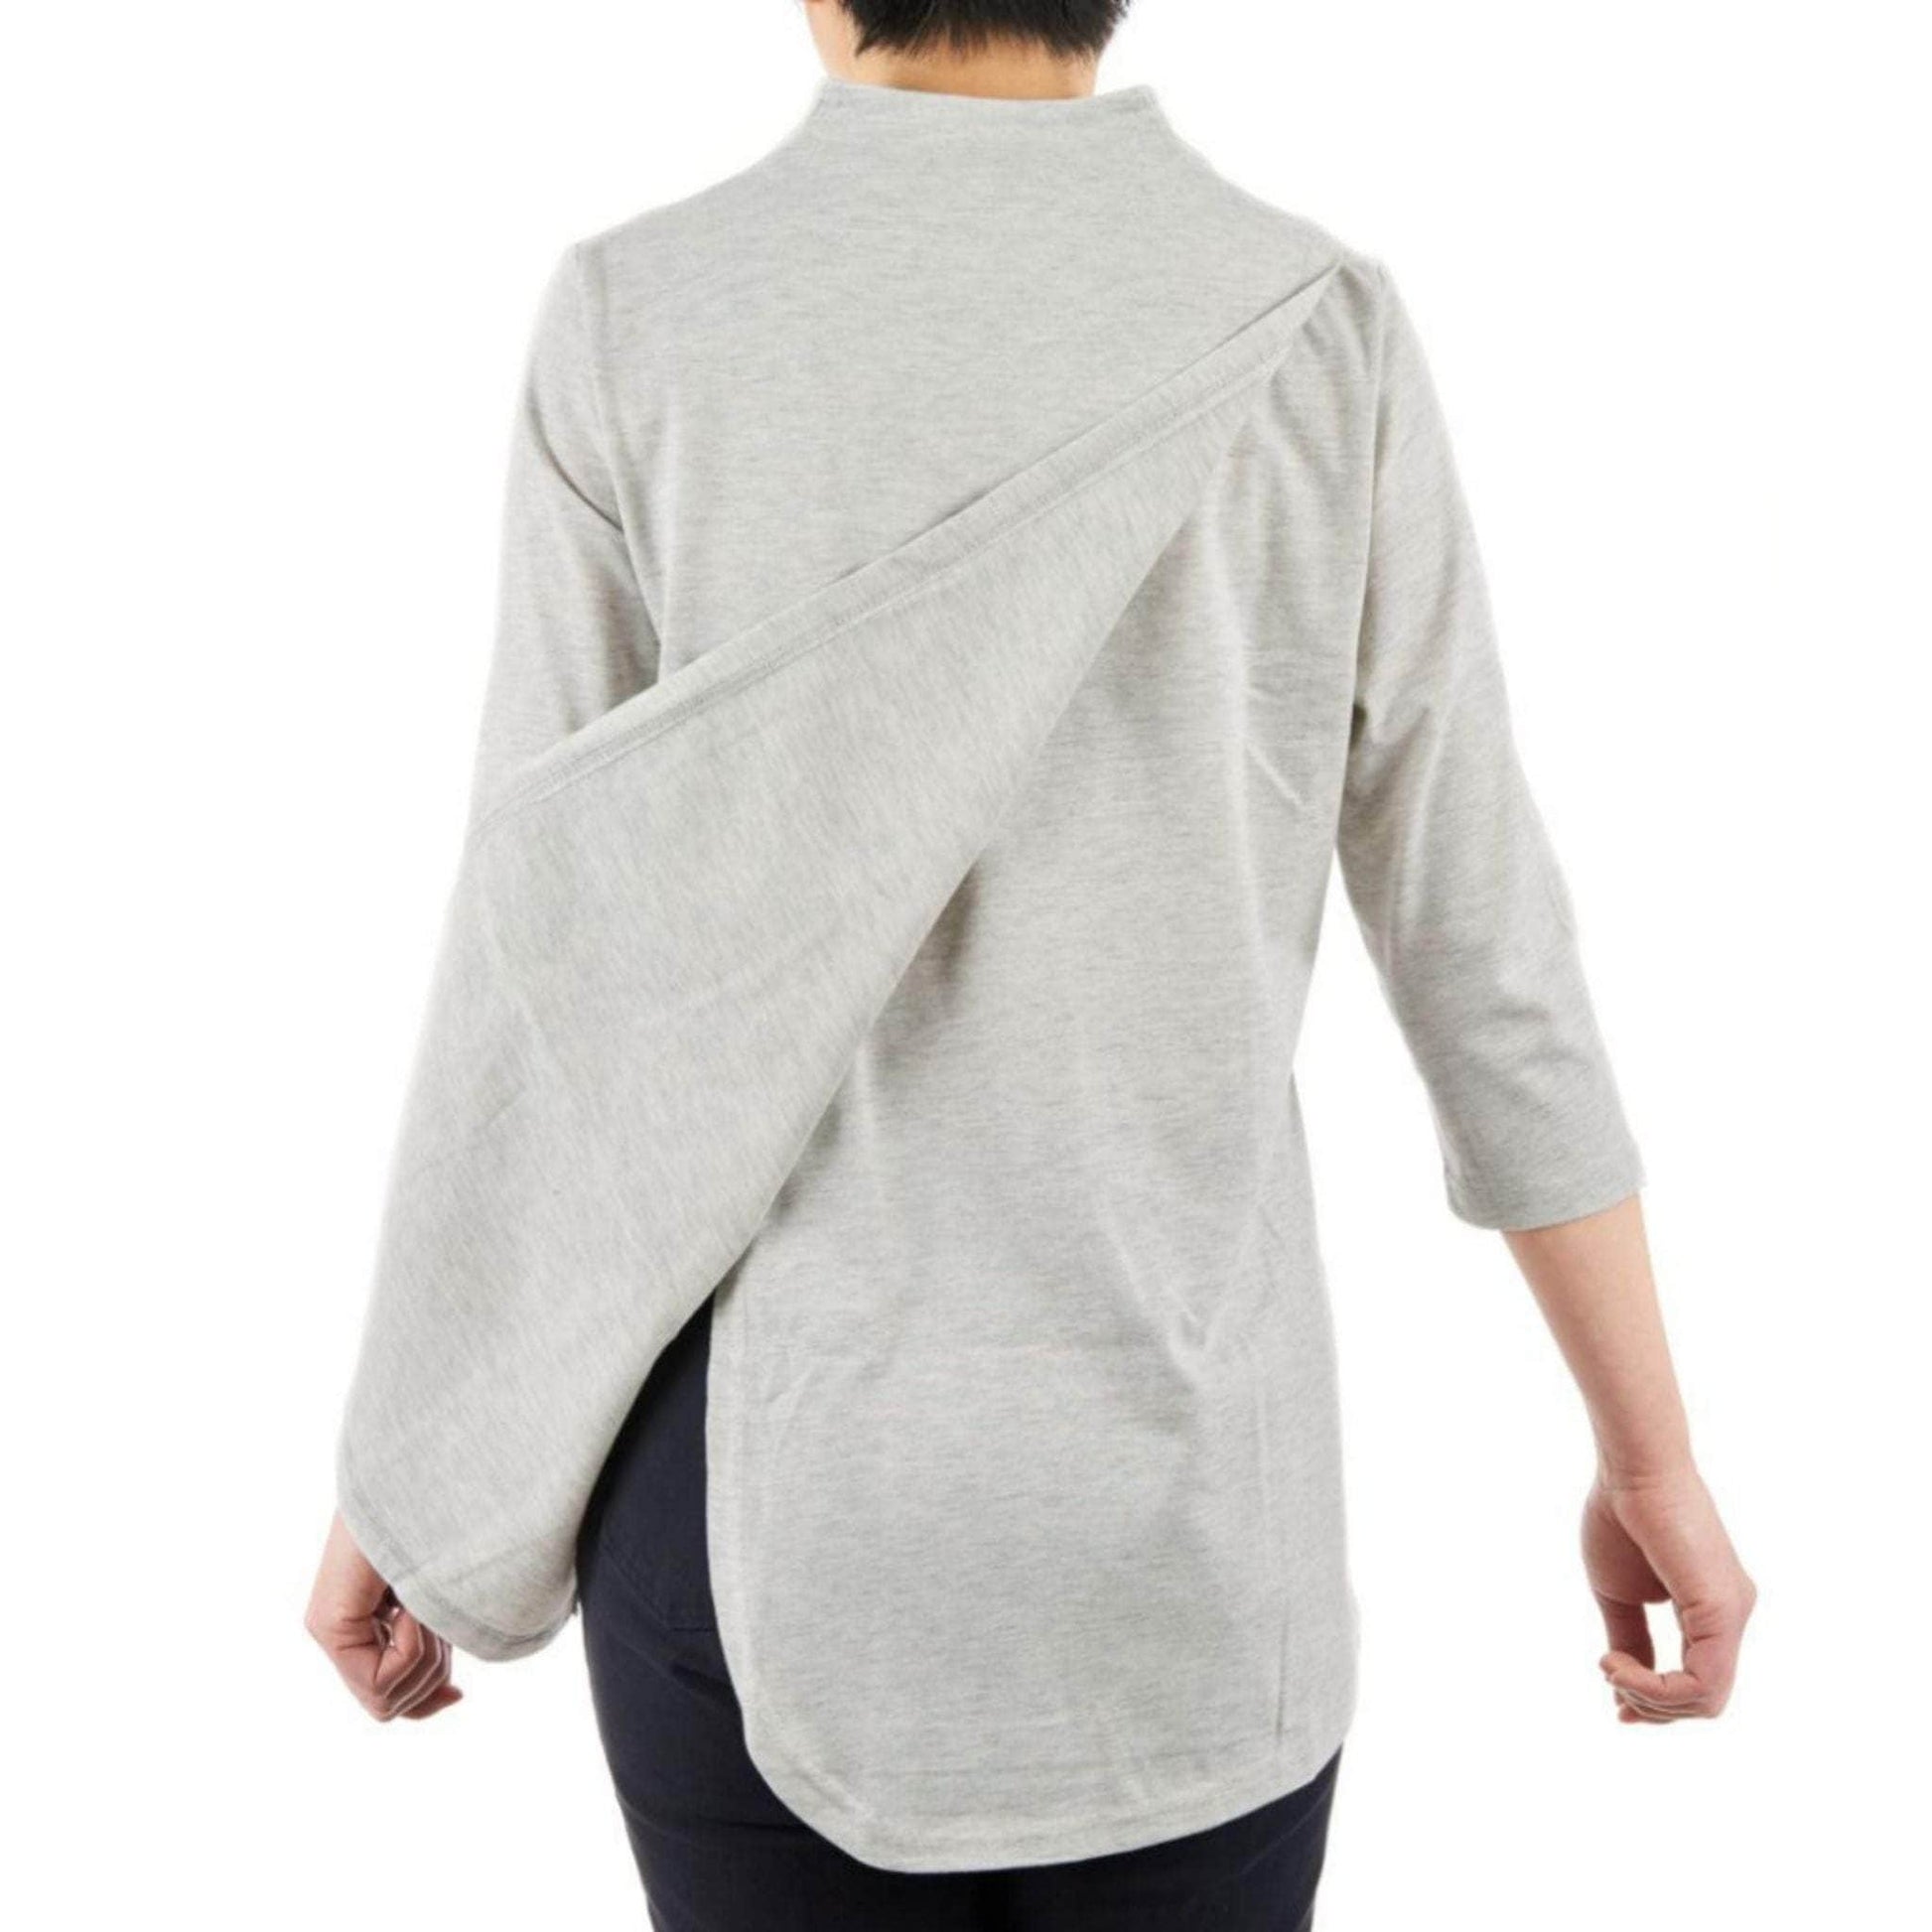 CC Women's Elizabeth 3/4 Sleeve V-Neck Top - Mid Grey - Caring Clothing